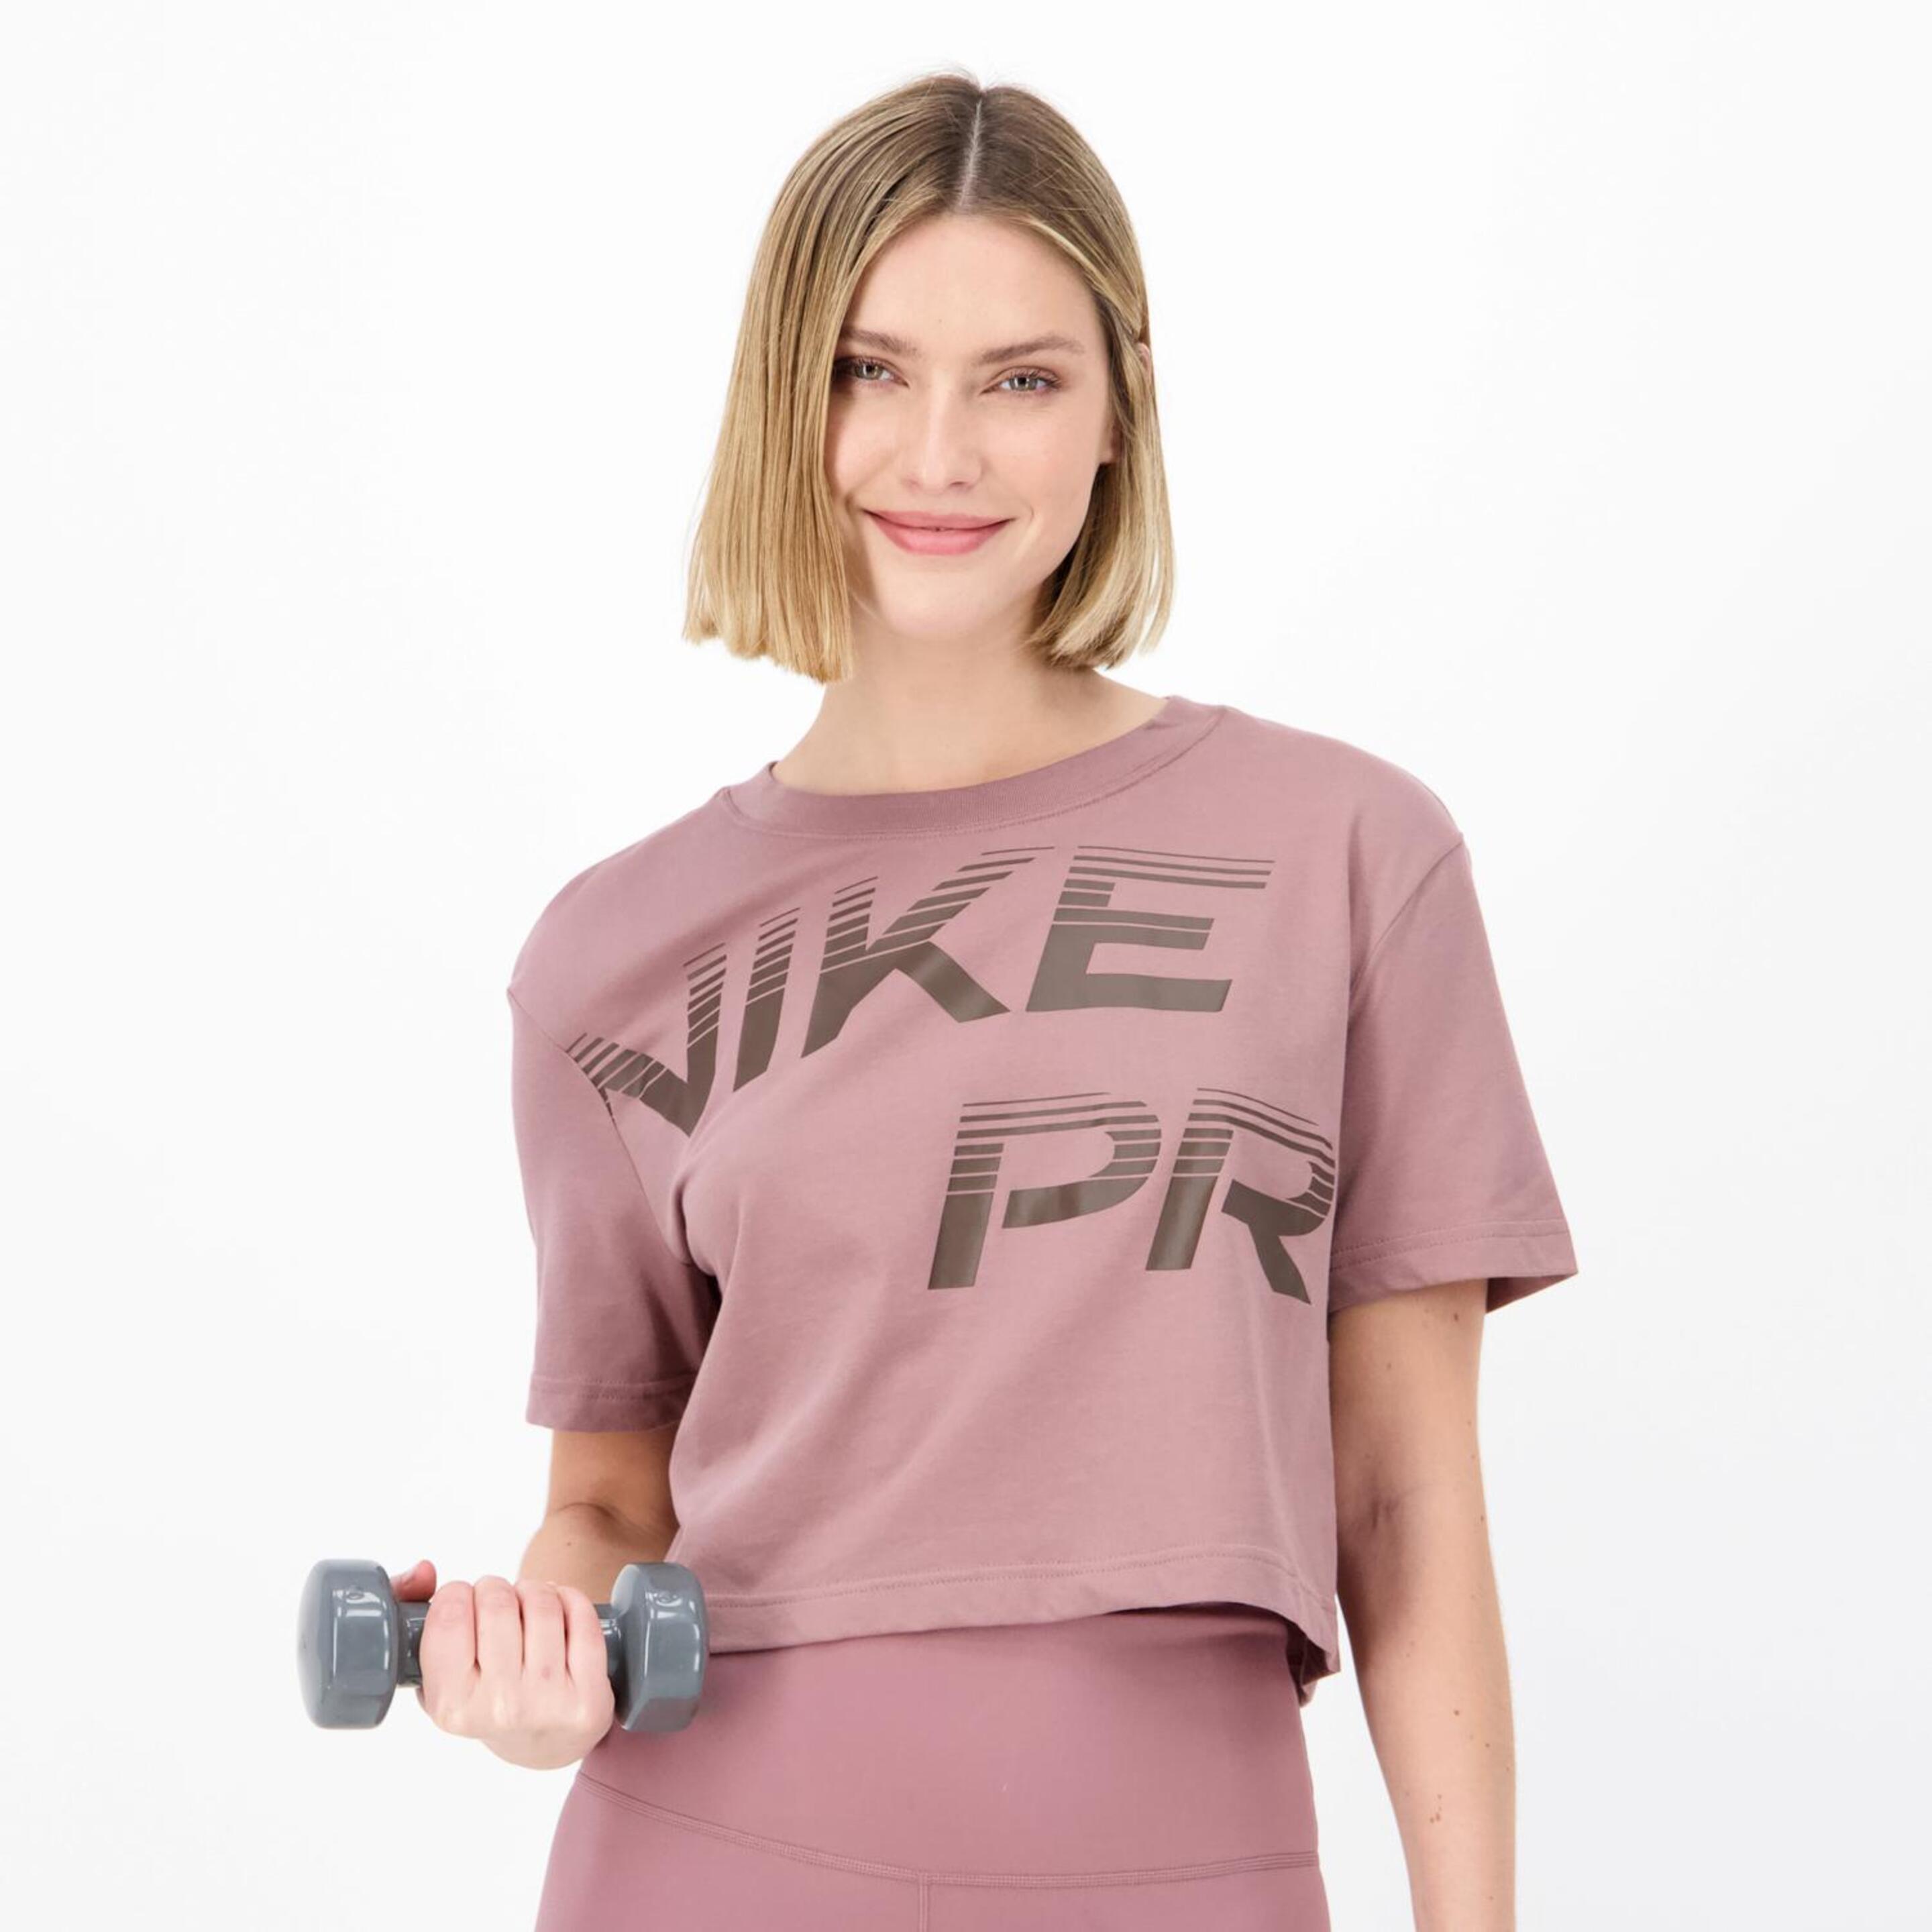 Camiseta Nike - morado - Camiseta Boxy Mujer